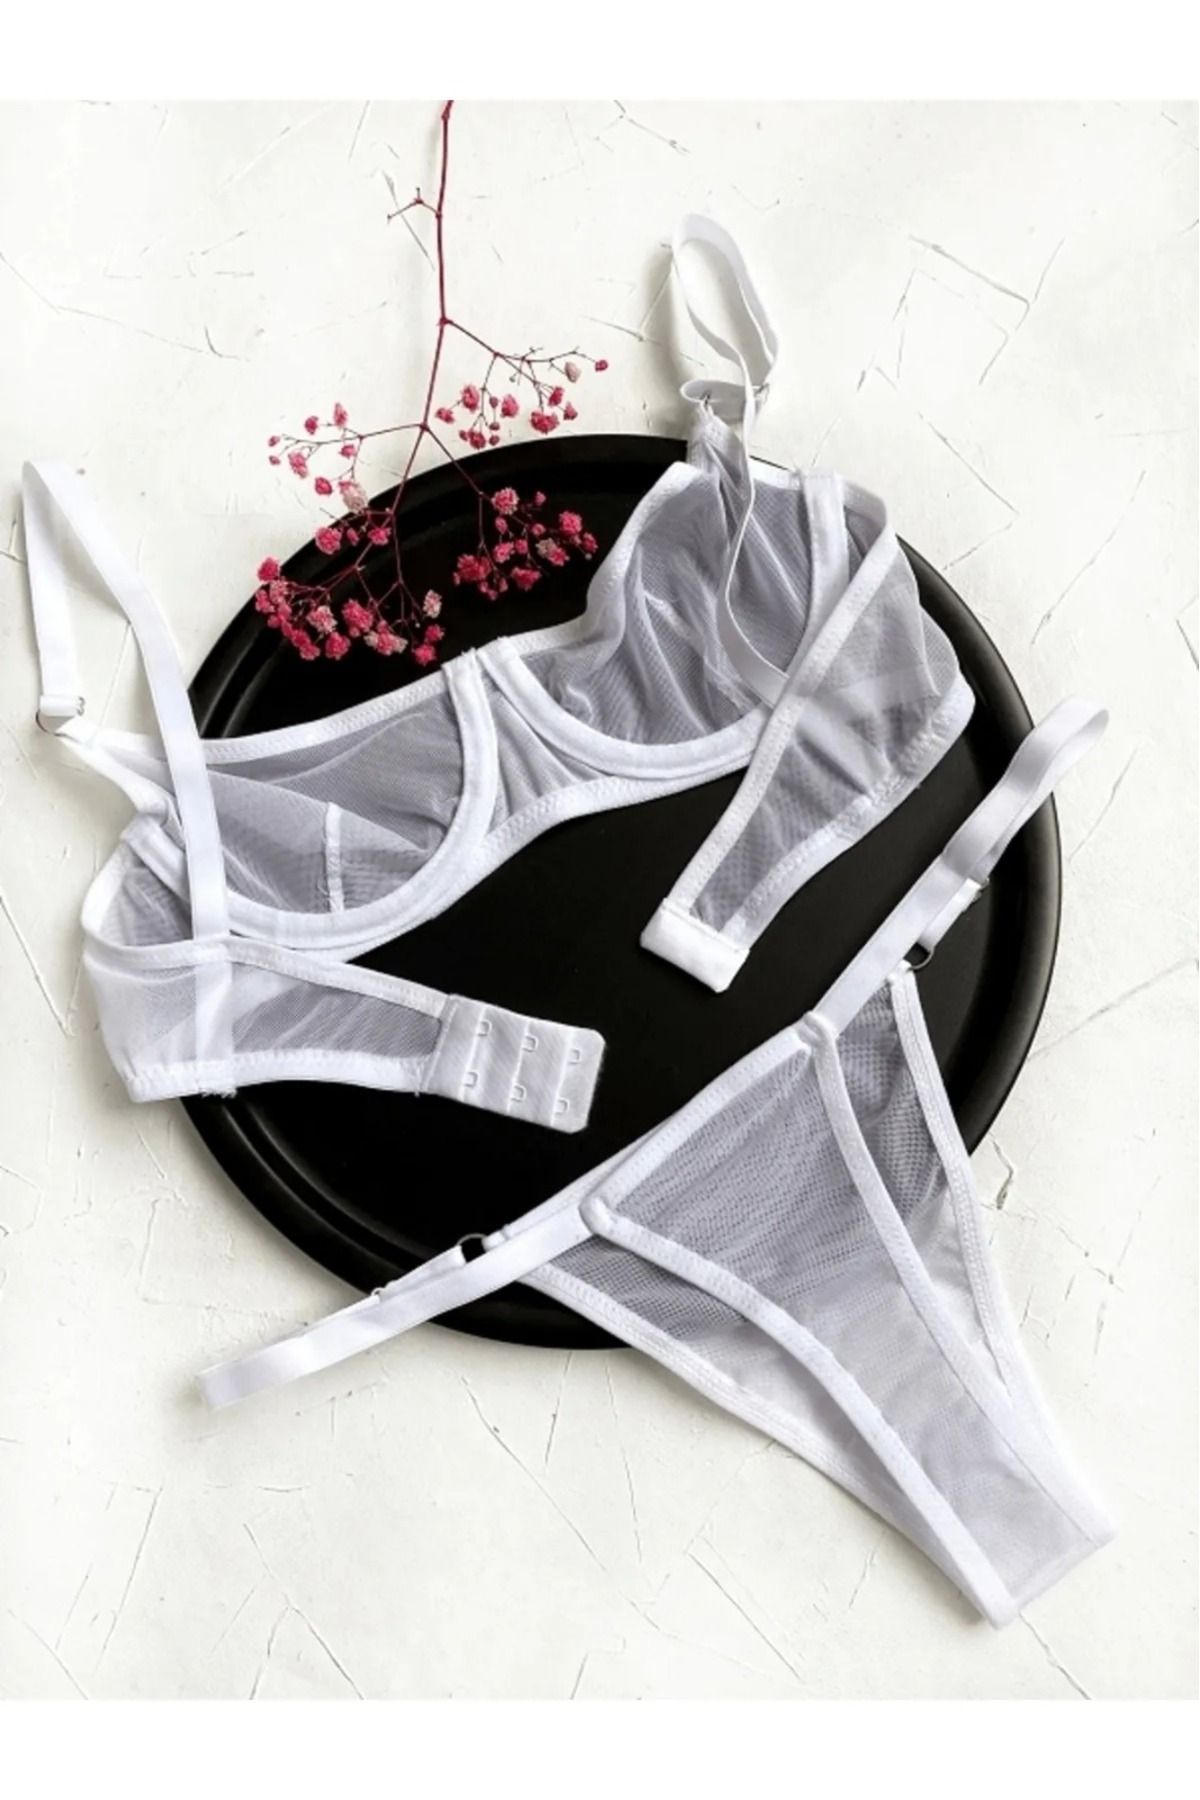 NARIYA Women's Bra Panties String Underwear Set Underwire Bra Set